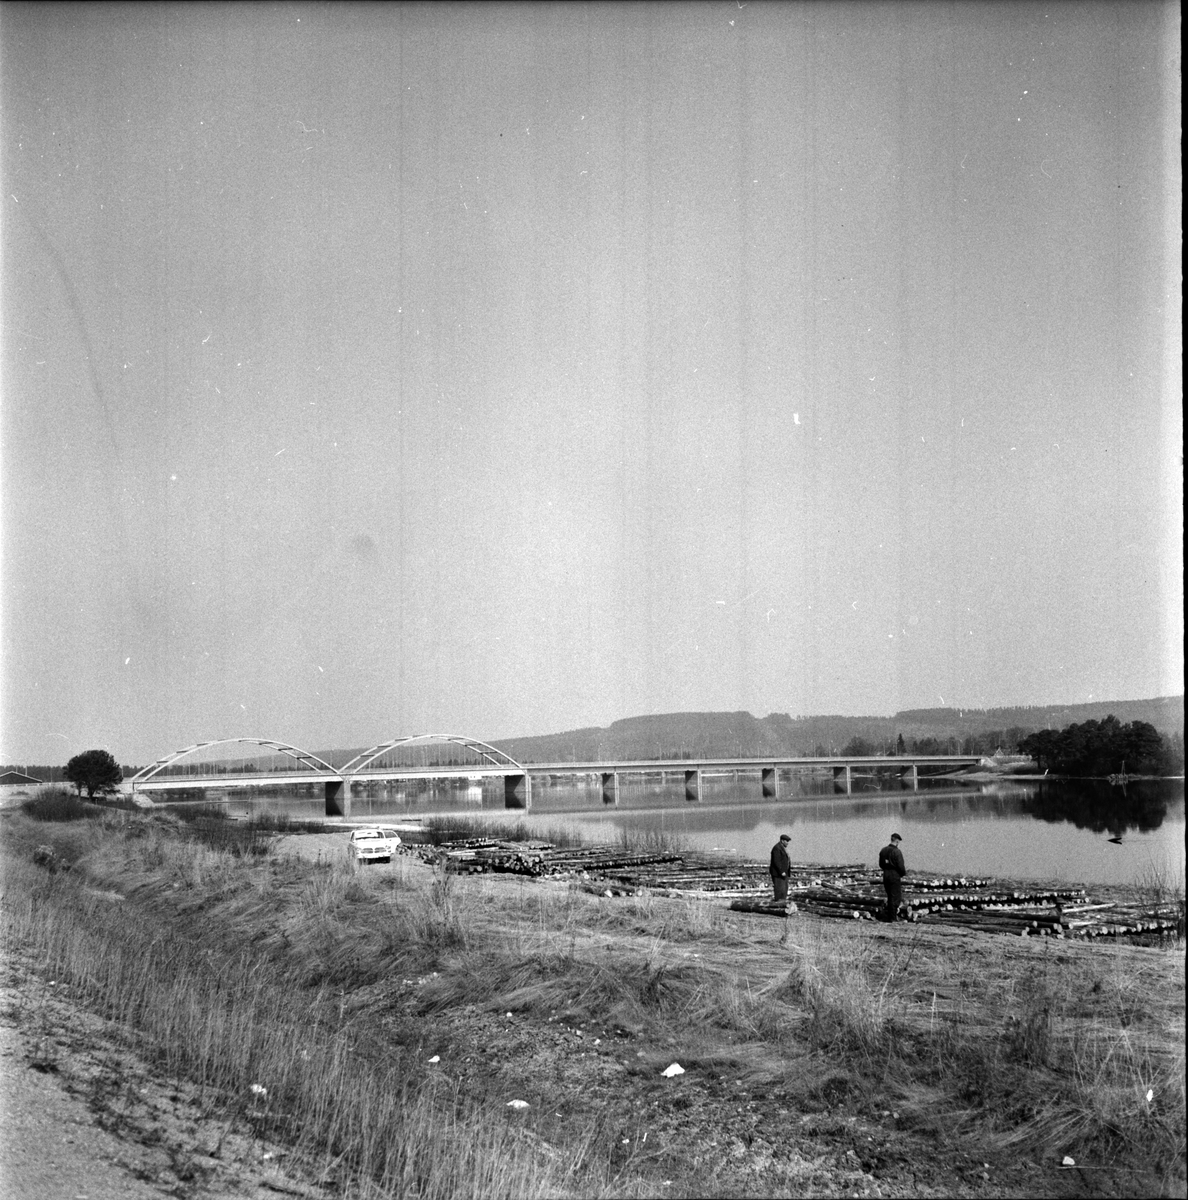 Ljusdal,
Nya bron över Ljusnan,
22 April 1965